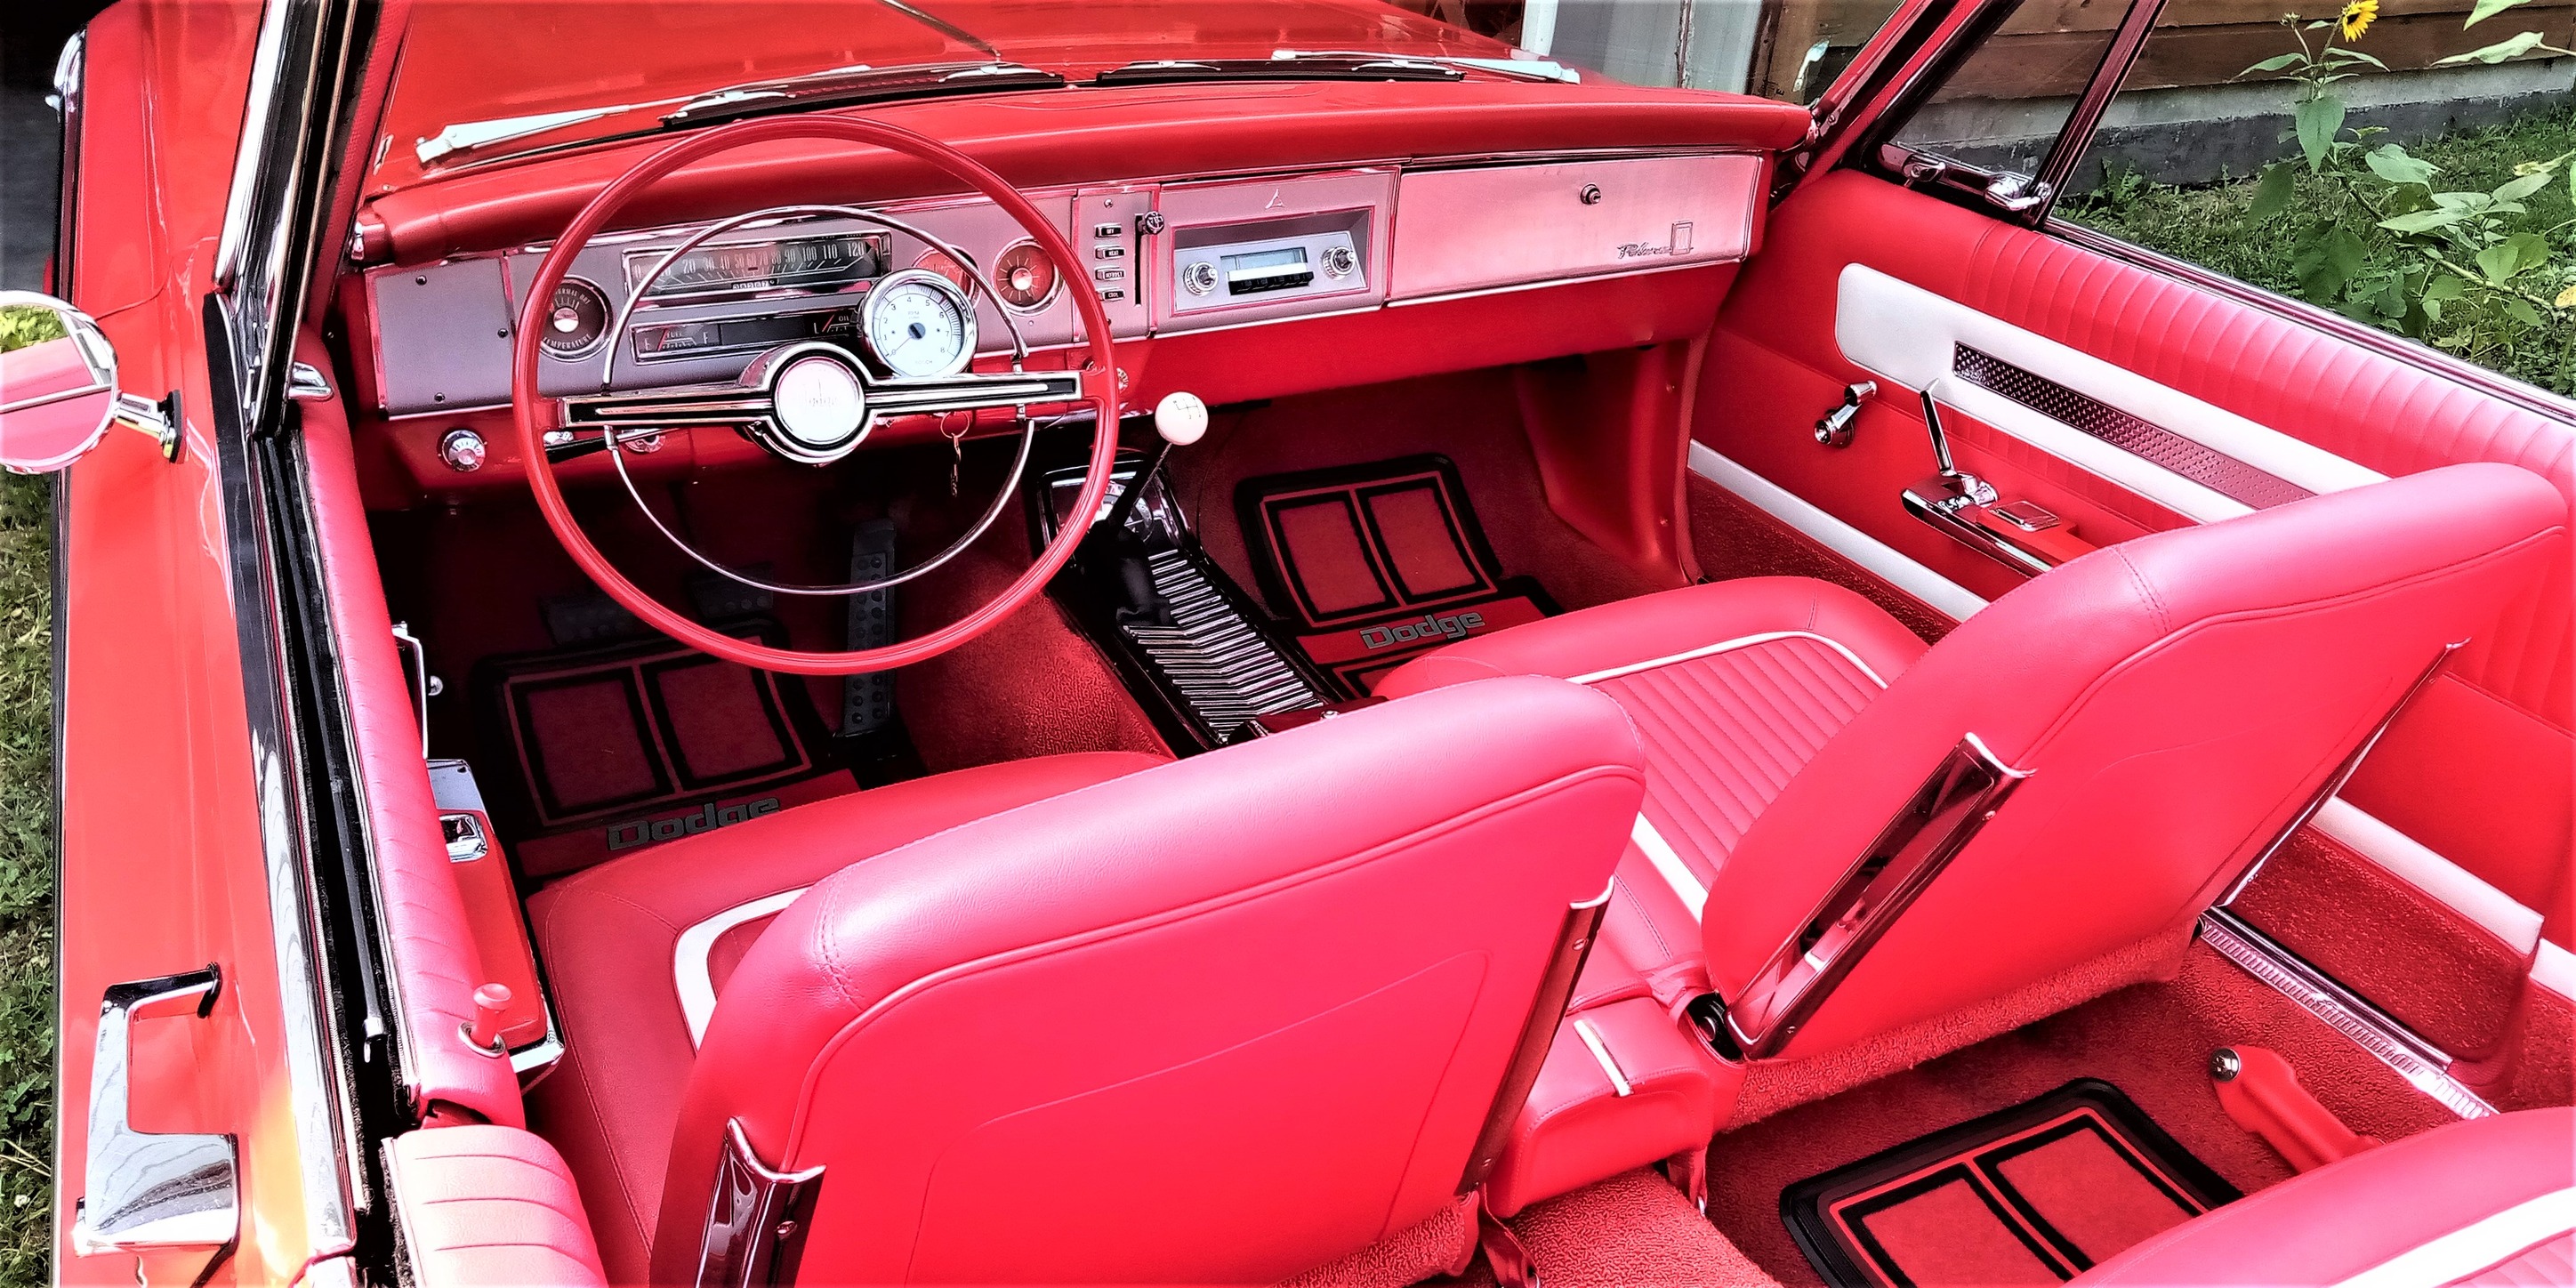 red interior.jpg